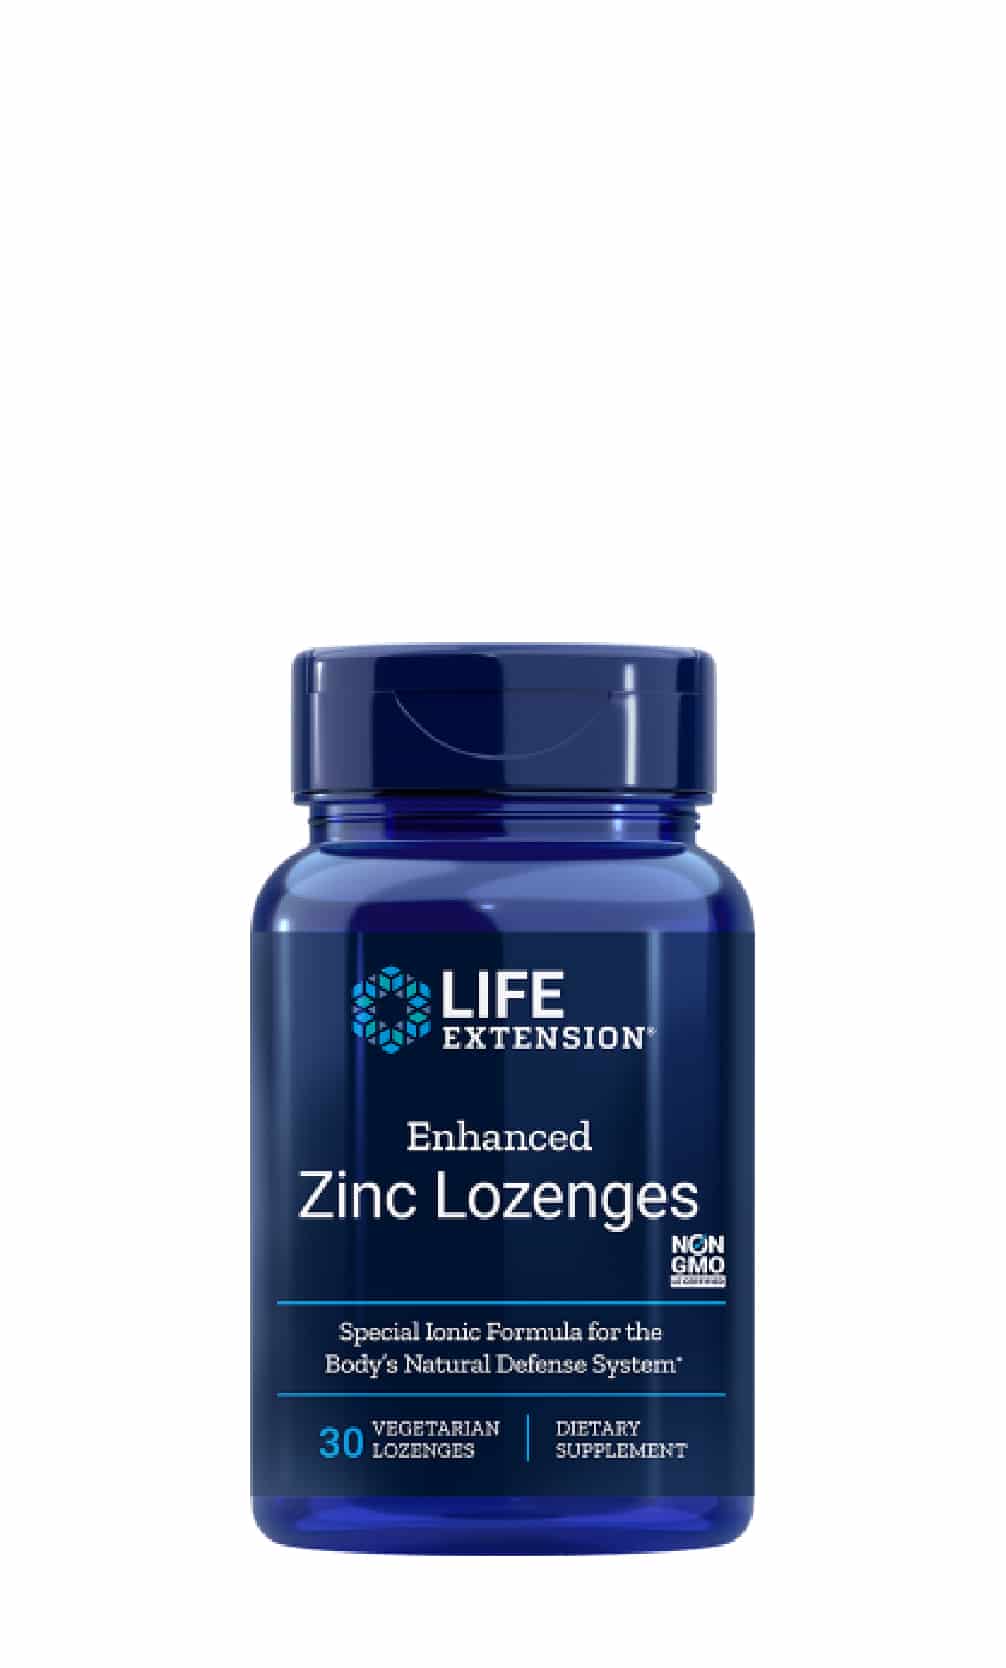 Life Extension Zinc Lozenges (enhanced) bei LiveHelfi kaufen